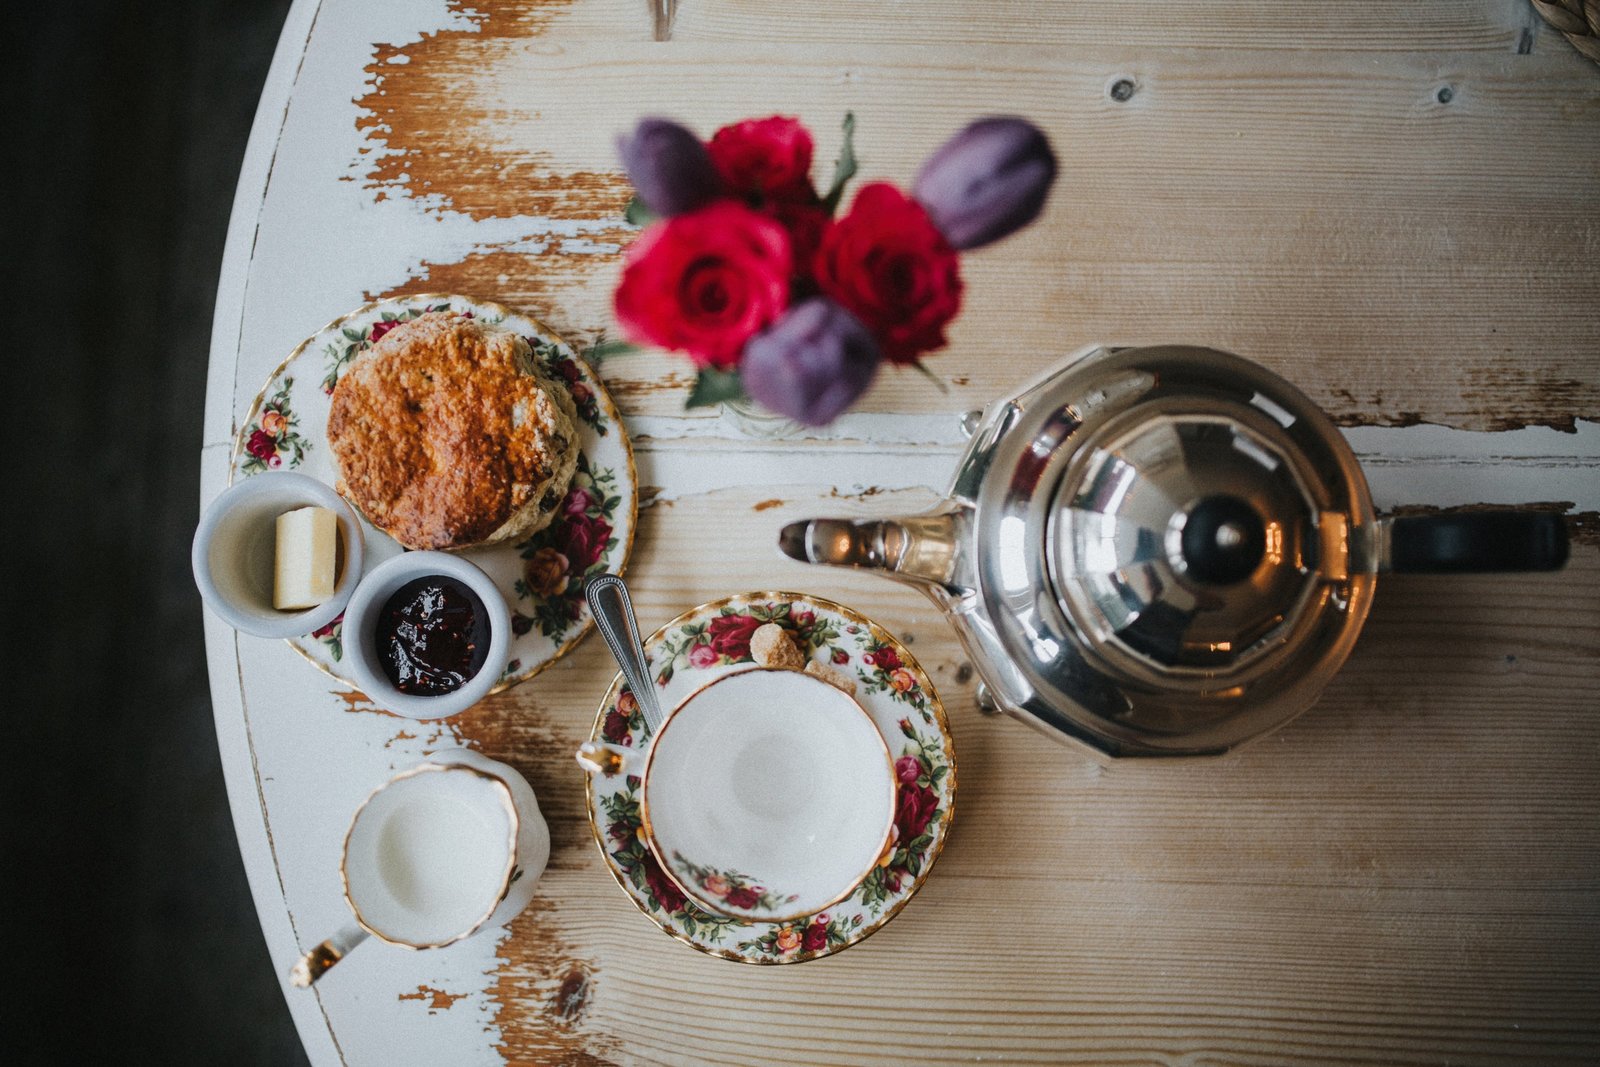 Afternoon Tea served at Baldry's Grasmere - Tearoom & Holiday Cottage